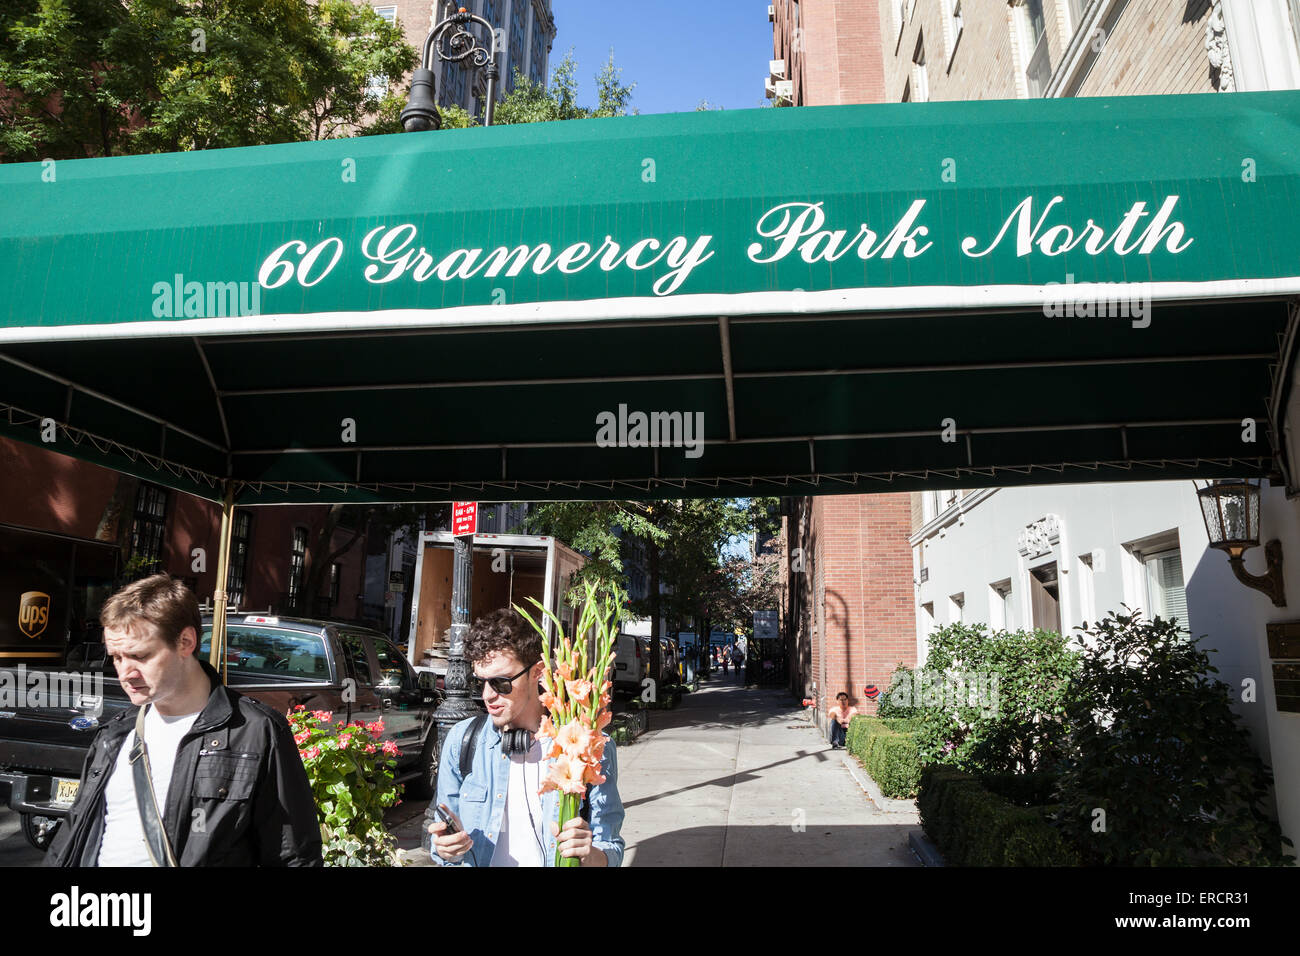 People pass by 60 Gramercy Park North, Manhattan, New York. Stock Photo